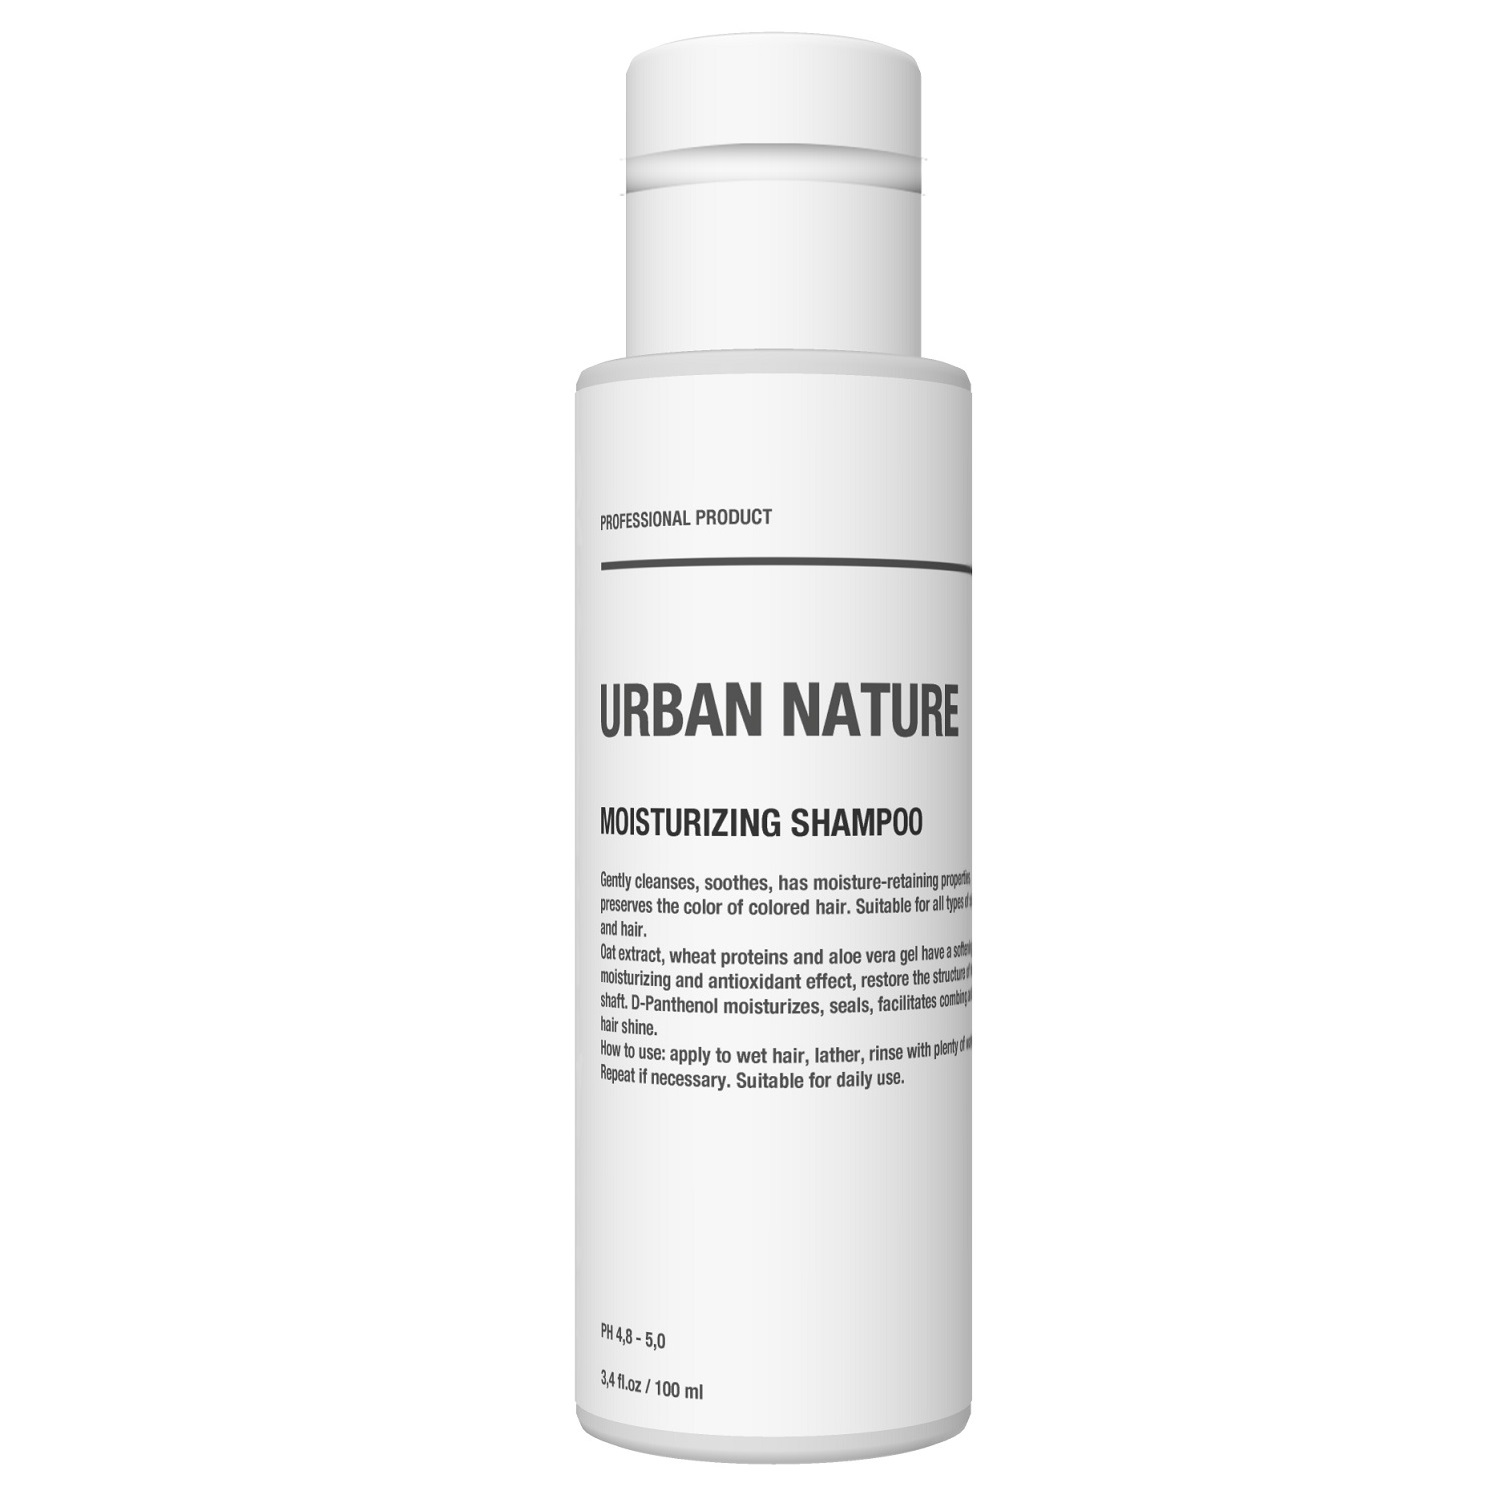 Urban Nature Увлажняющий шампунь, 100 мл (Urban Nature, Увлажнение)